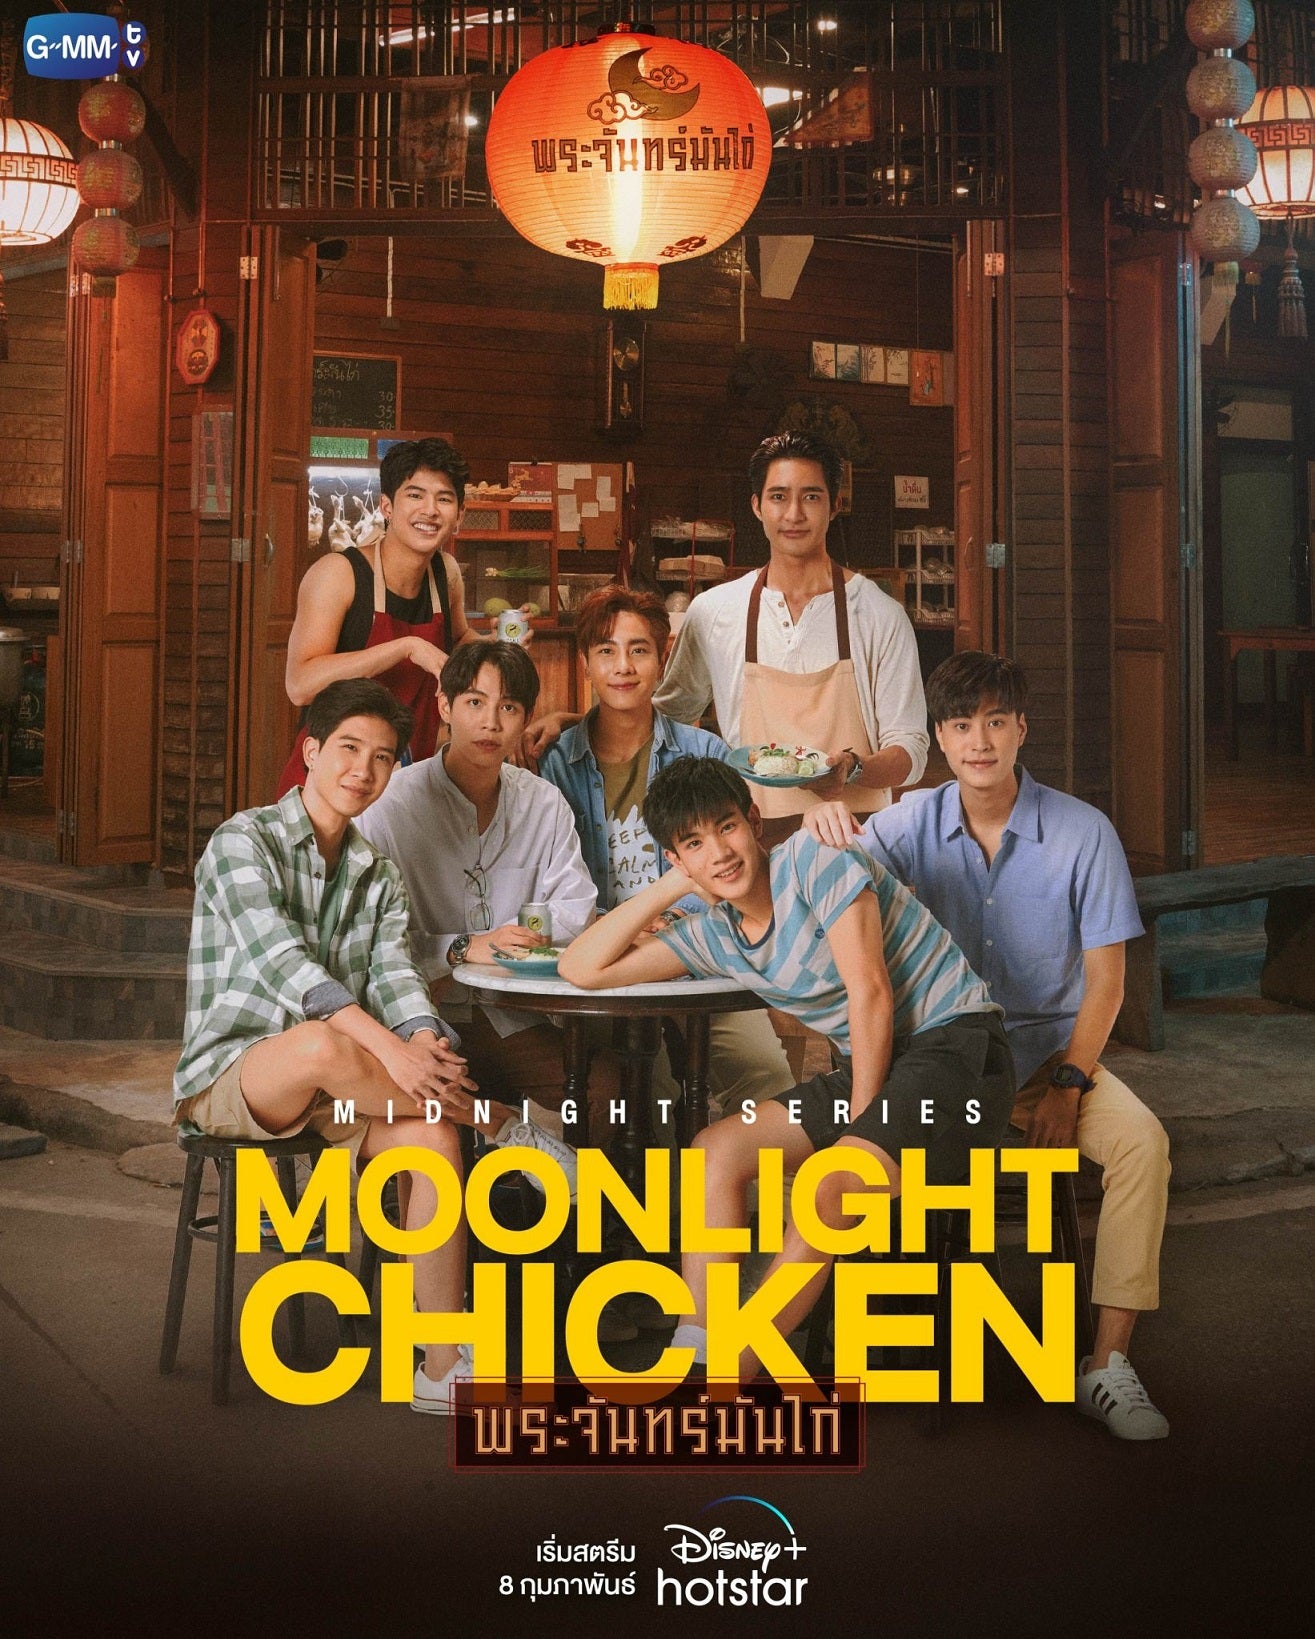 TV ratings for Moonlight Chicken (Midnight Series : Moonlight Chicken พระจันทร์มันไก่) in Thailand. GMM 25 TV series